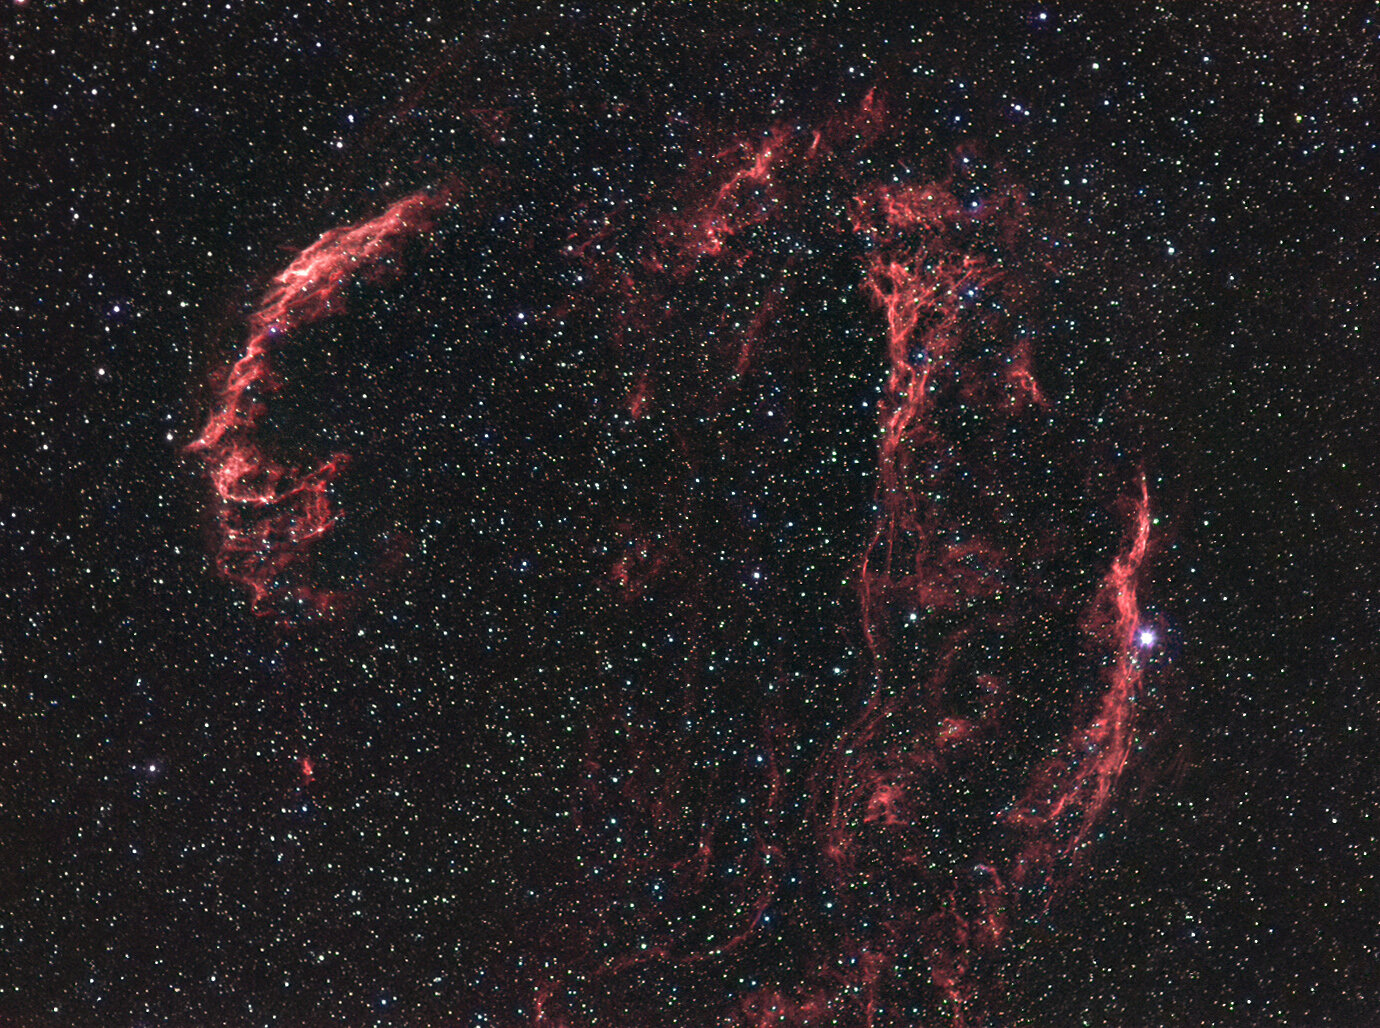 Veil Nebula Complex